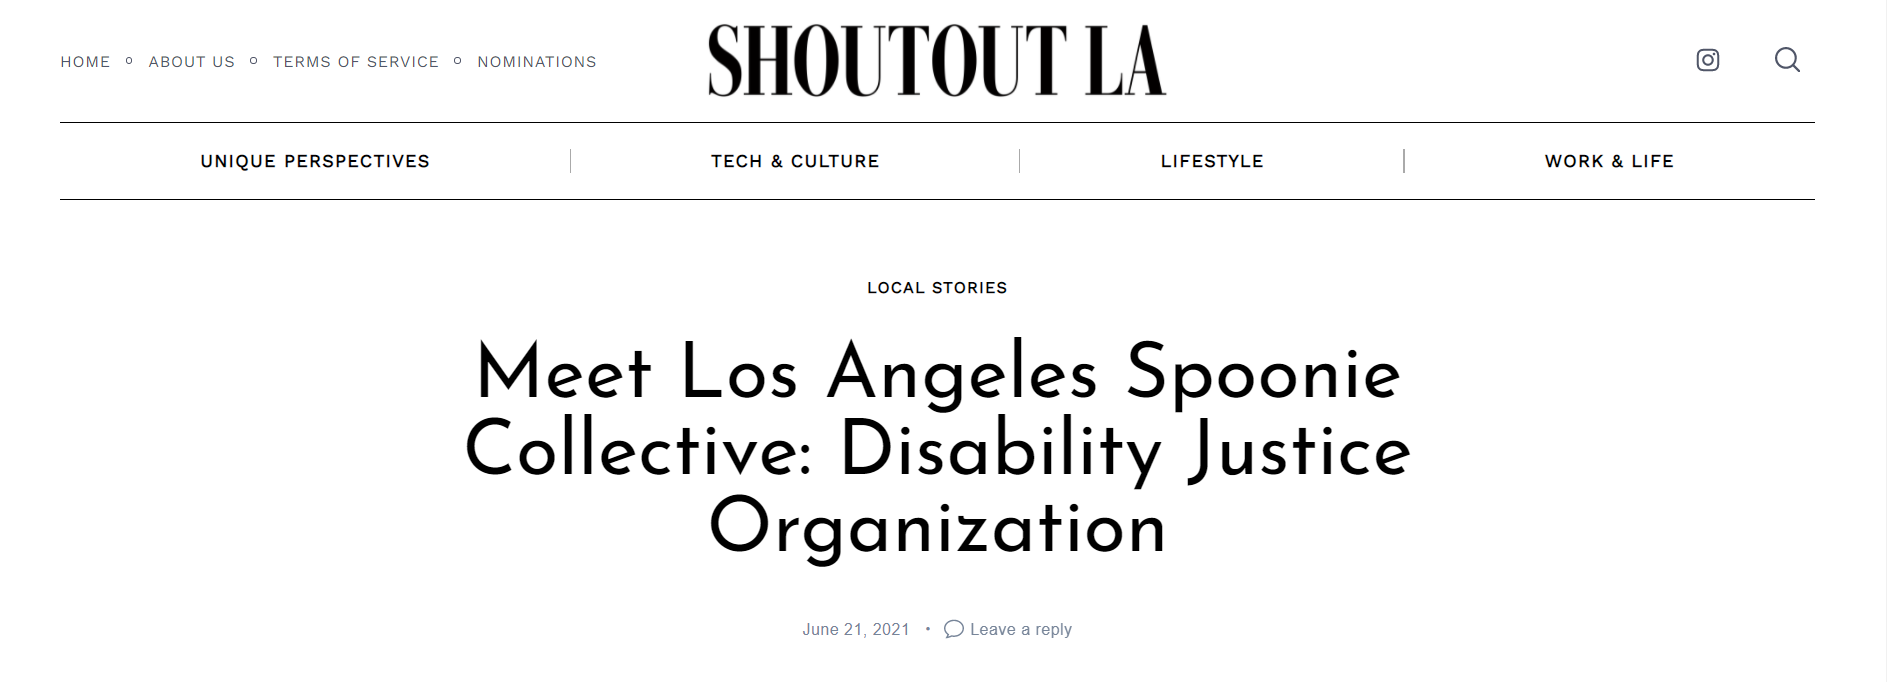 Shoutout LA - Meet Los Angeles Spoonie Collective: Disability Justice Organization